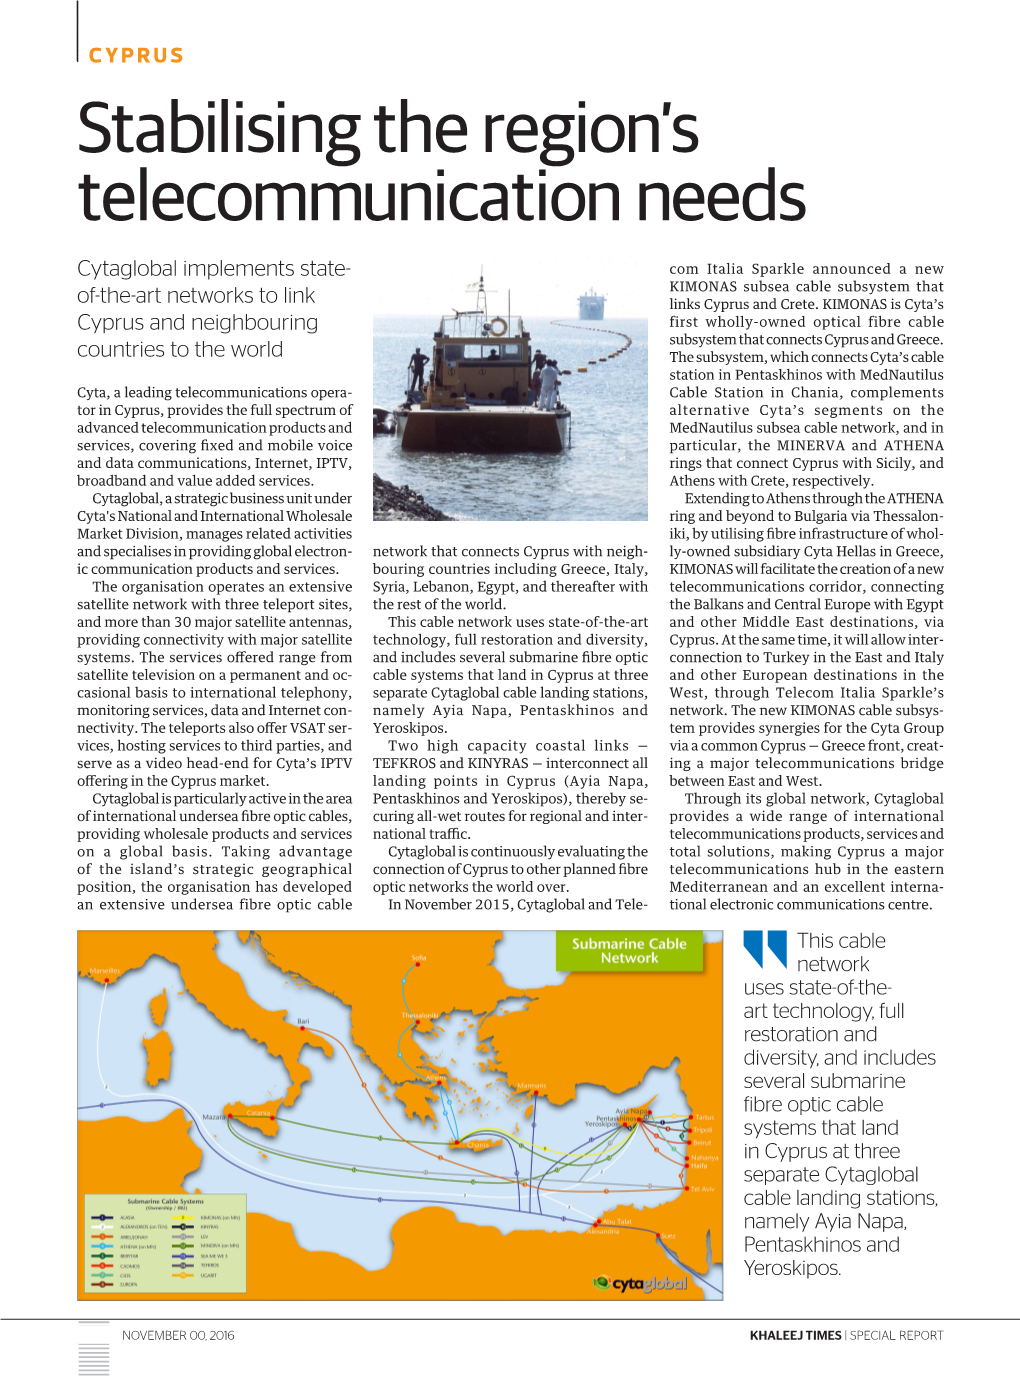 Cyta's Stabilising the Region's Telecommunication Needs, Khaleej